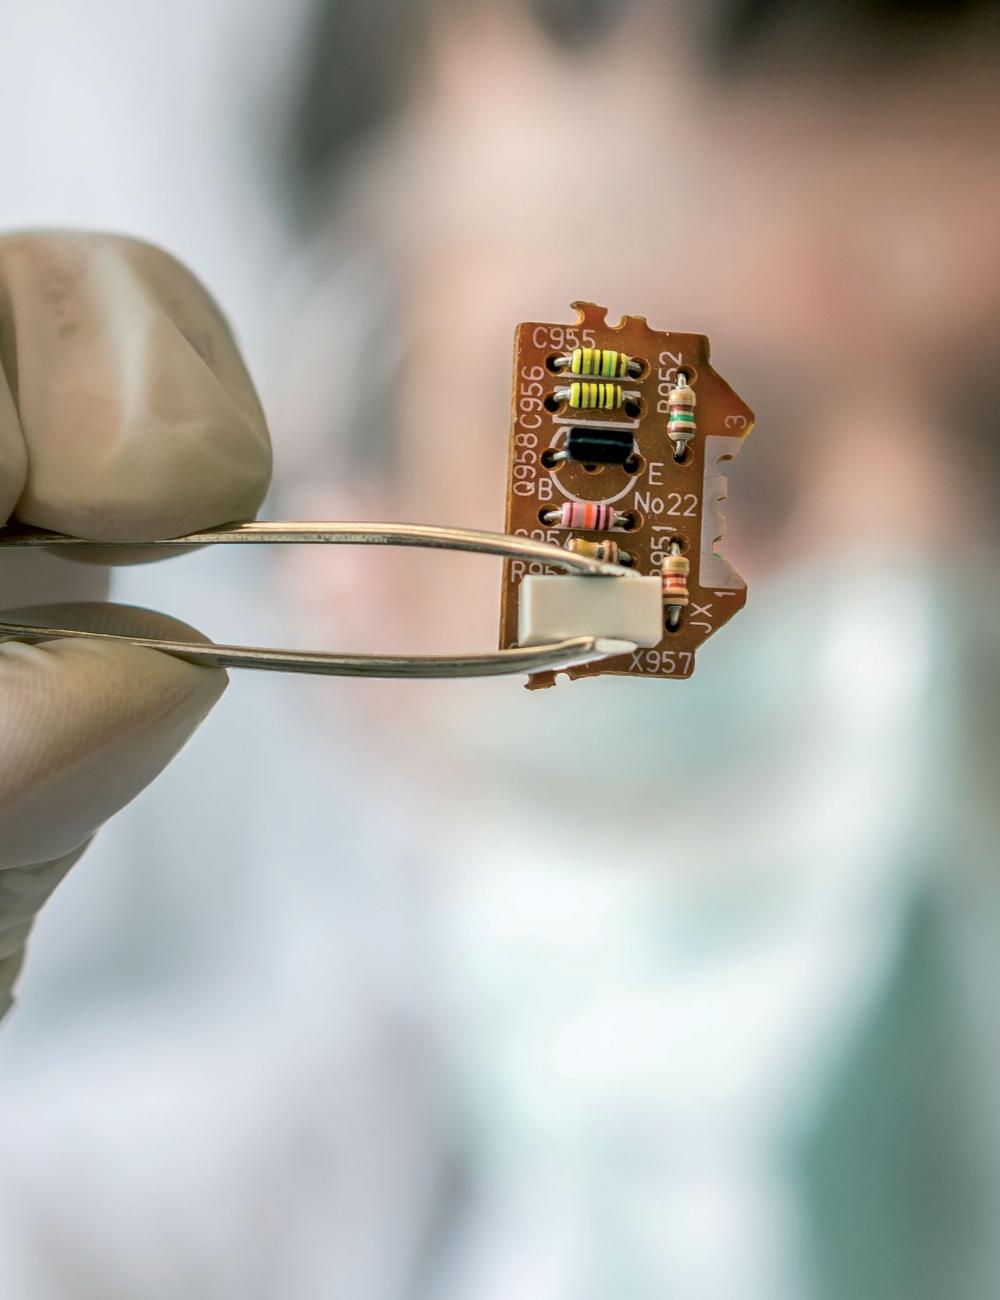 Lab tech holding a microchip